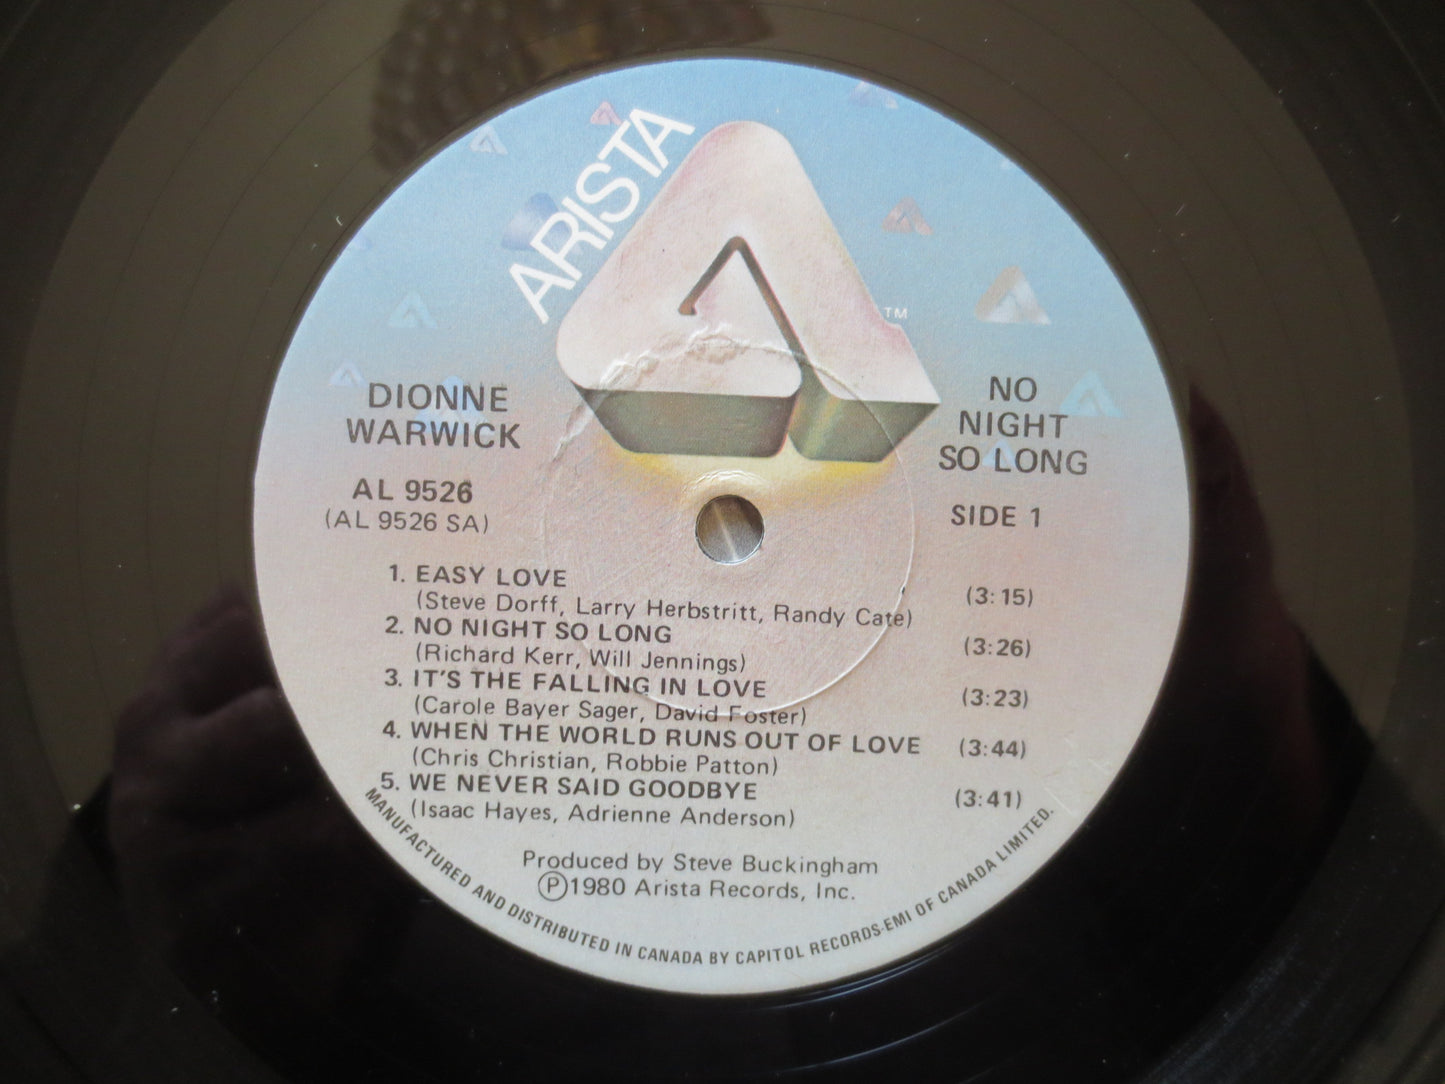 DIONNE WARWICKE, DIONNE, Pop Record, Vintage Vinyl, Record Vinyl, Records, Vinyl Record, Vinyl Pop, Vinyl Lp, 1980 Records